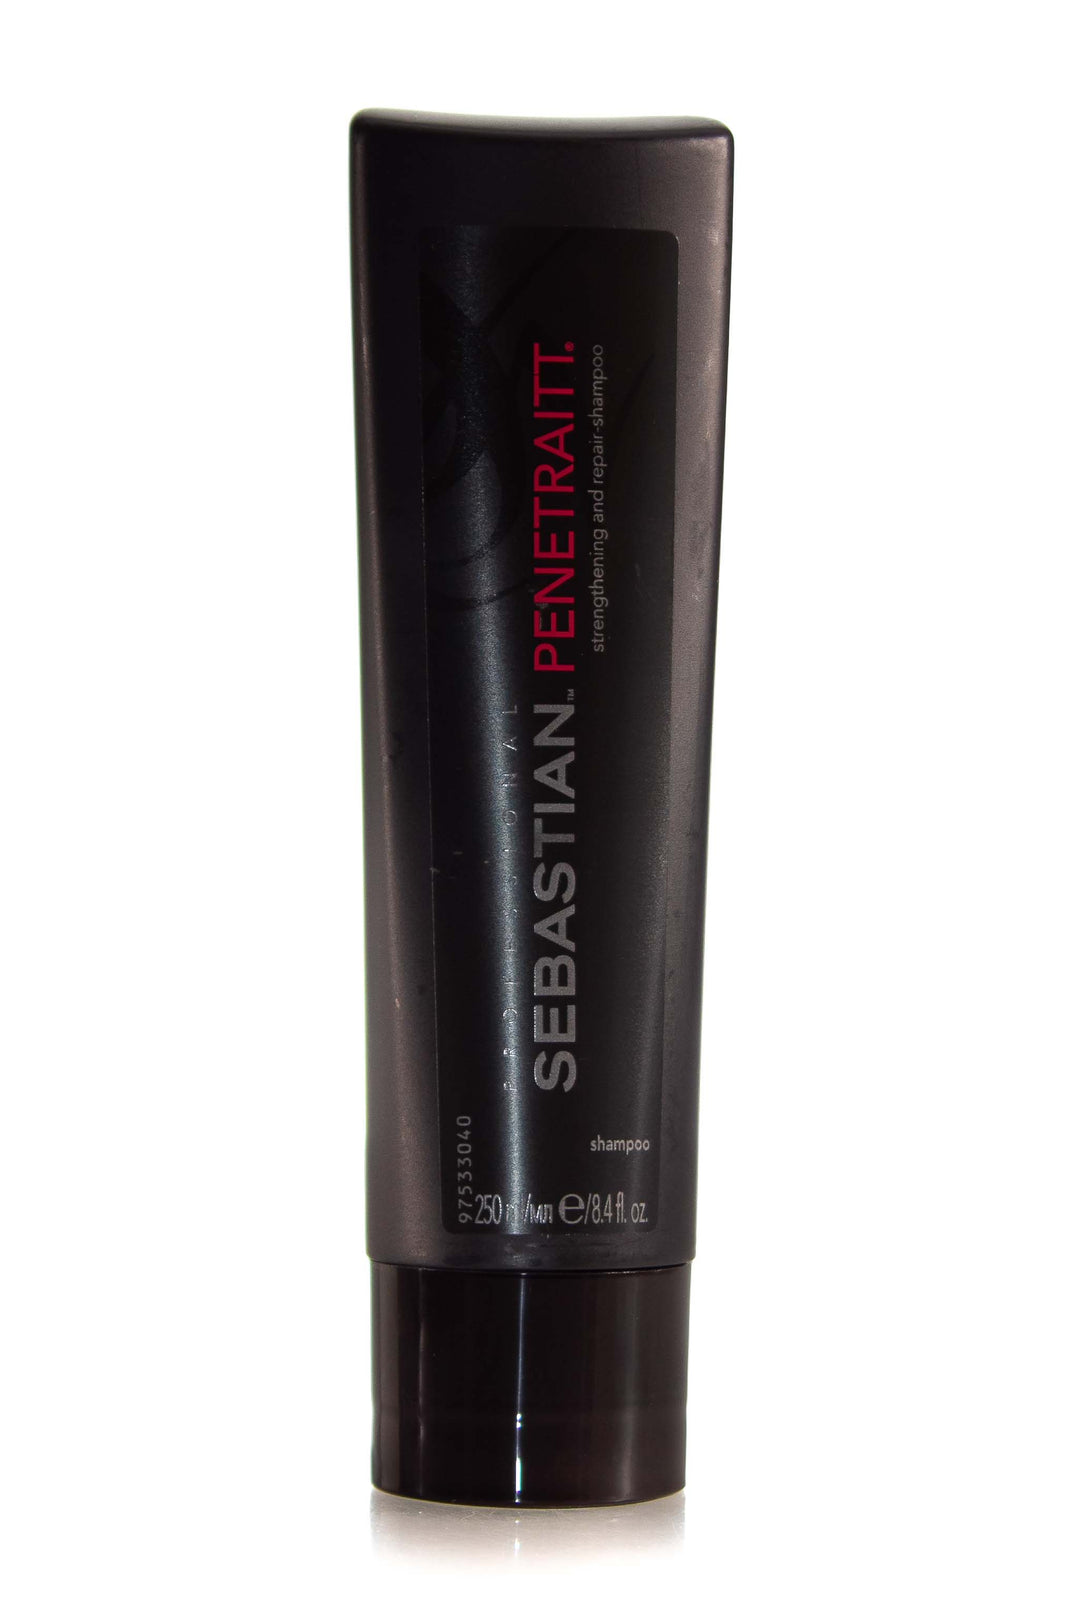 sebastian-penetraitt-shampoo-250ml